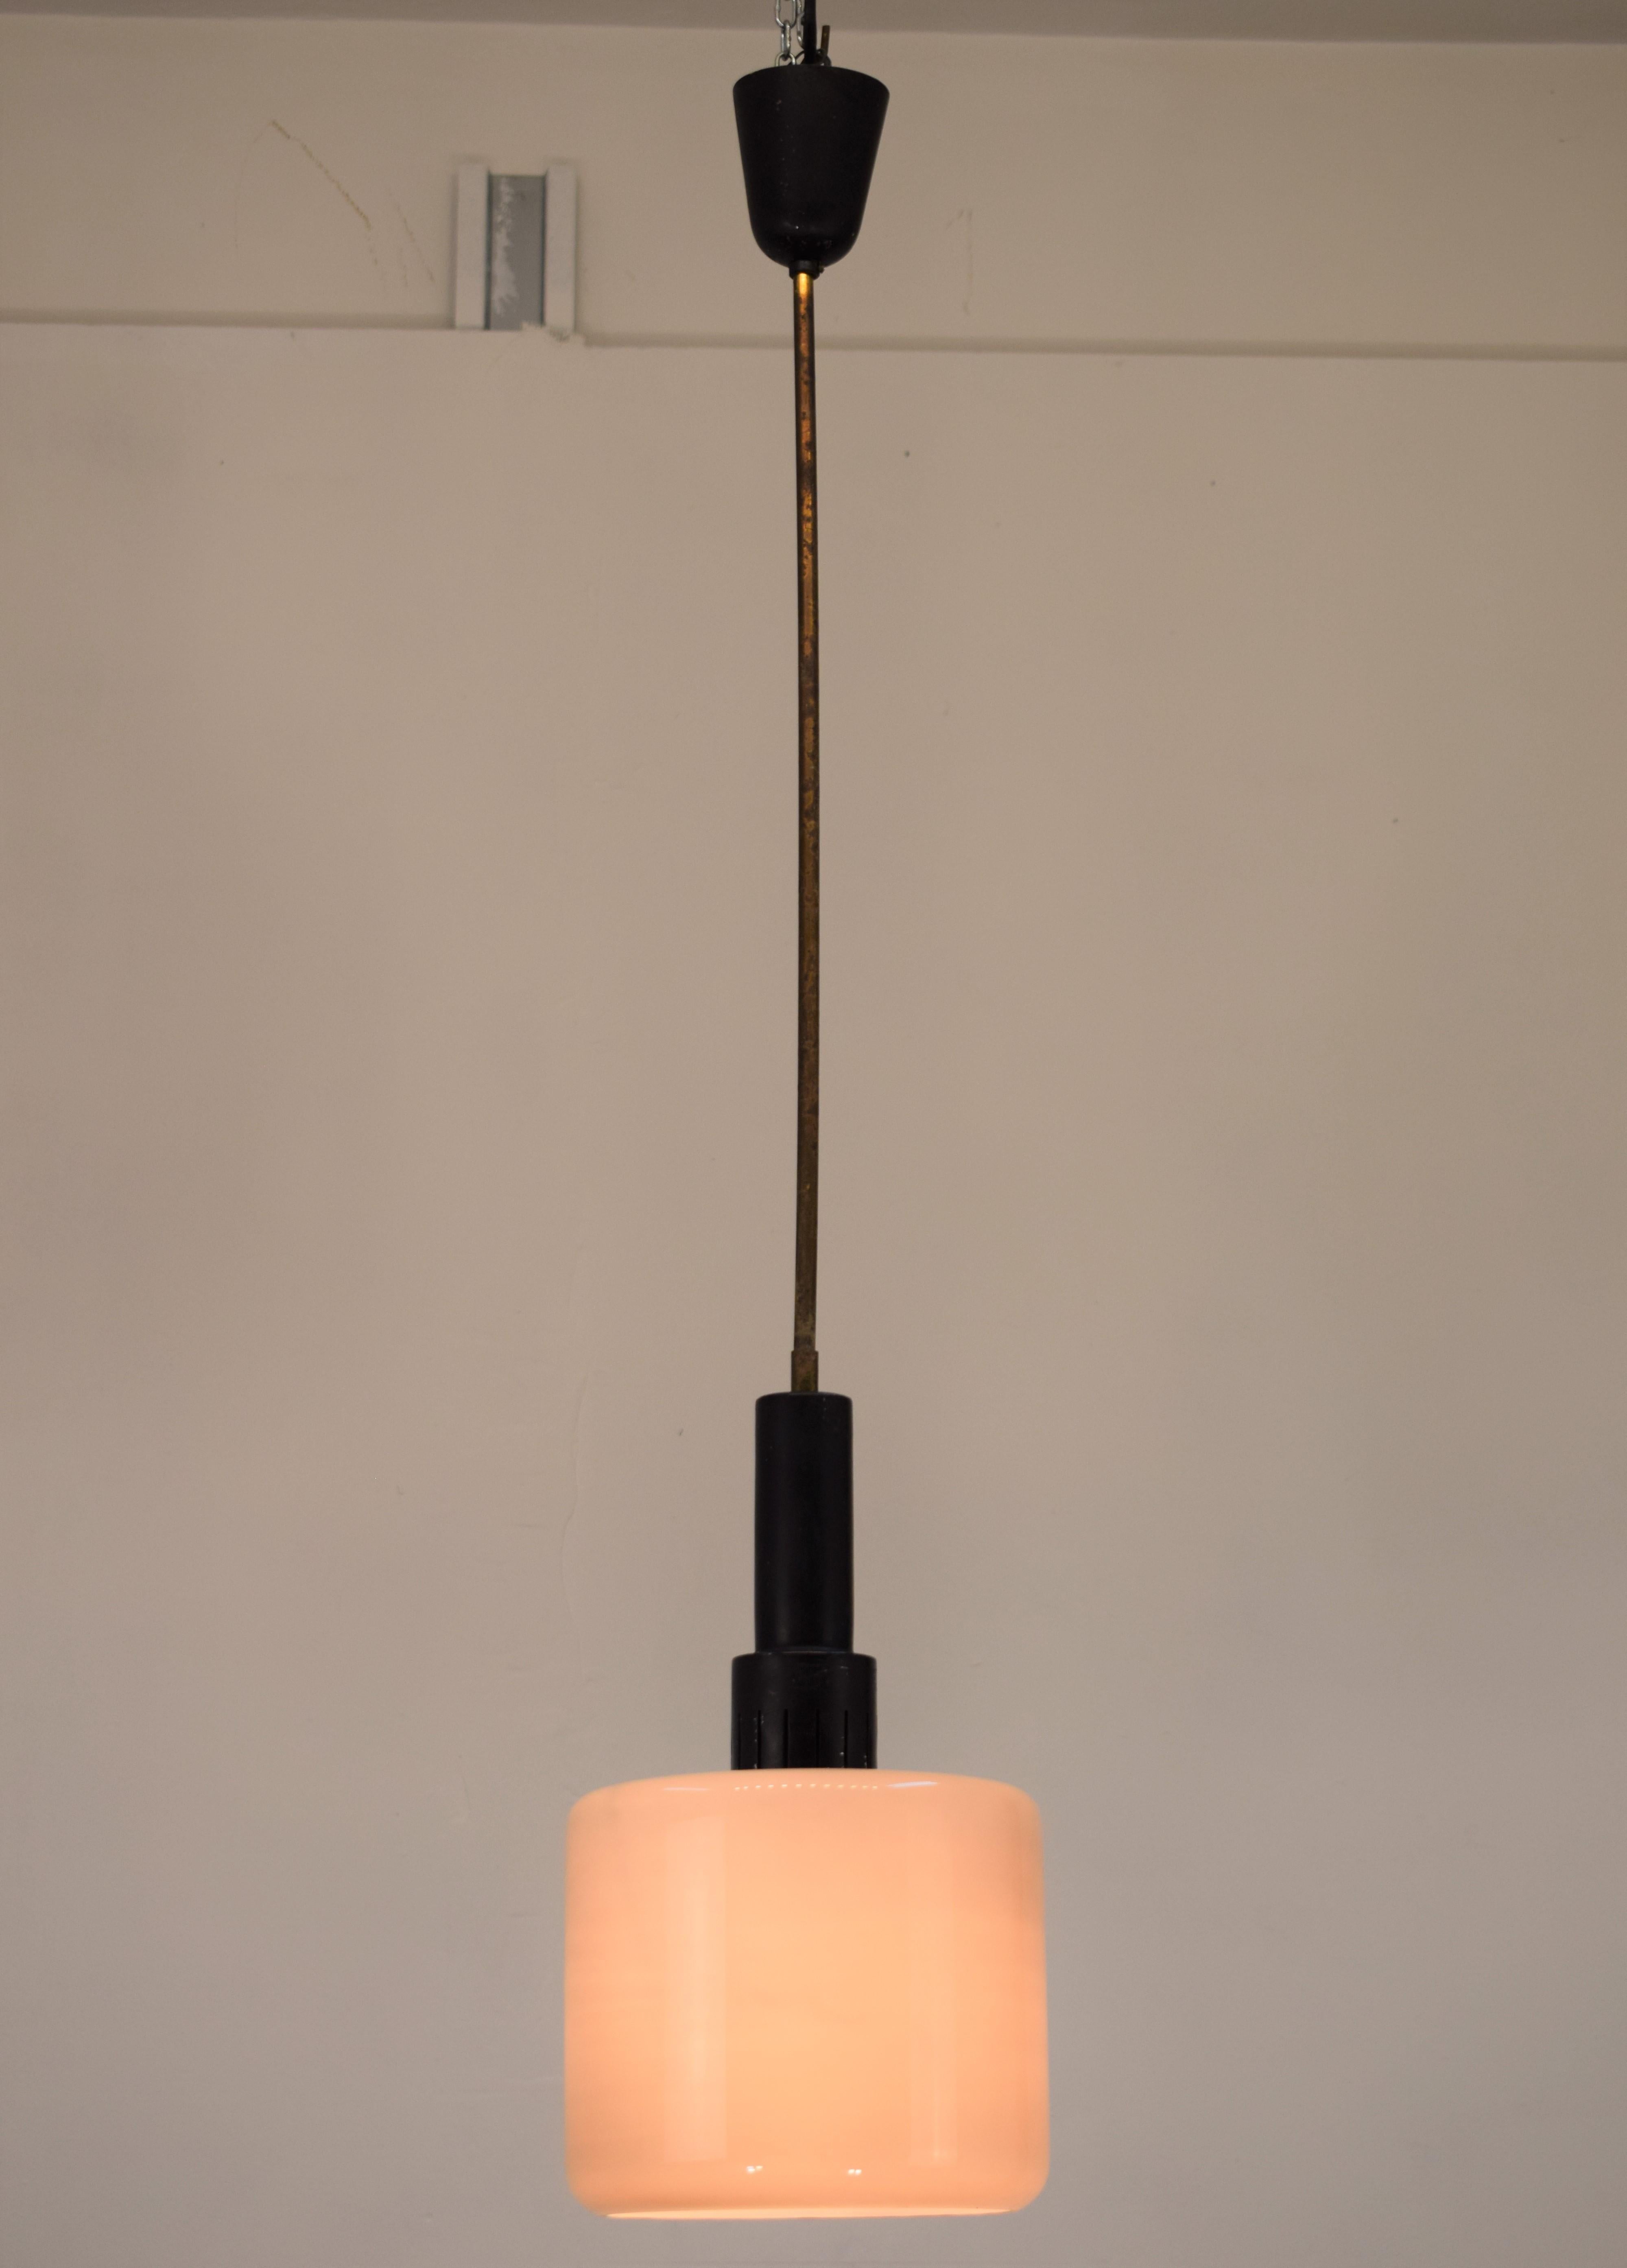 Italian pendant lamp by Stilnovo, 1960s.

Dimensions: H= 94 cm; D= 19 cm.